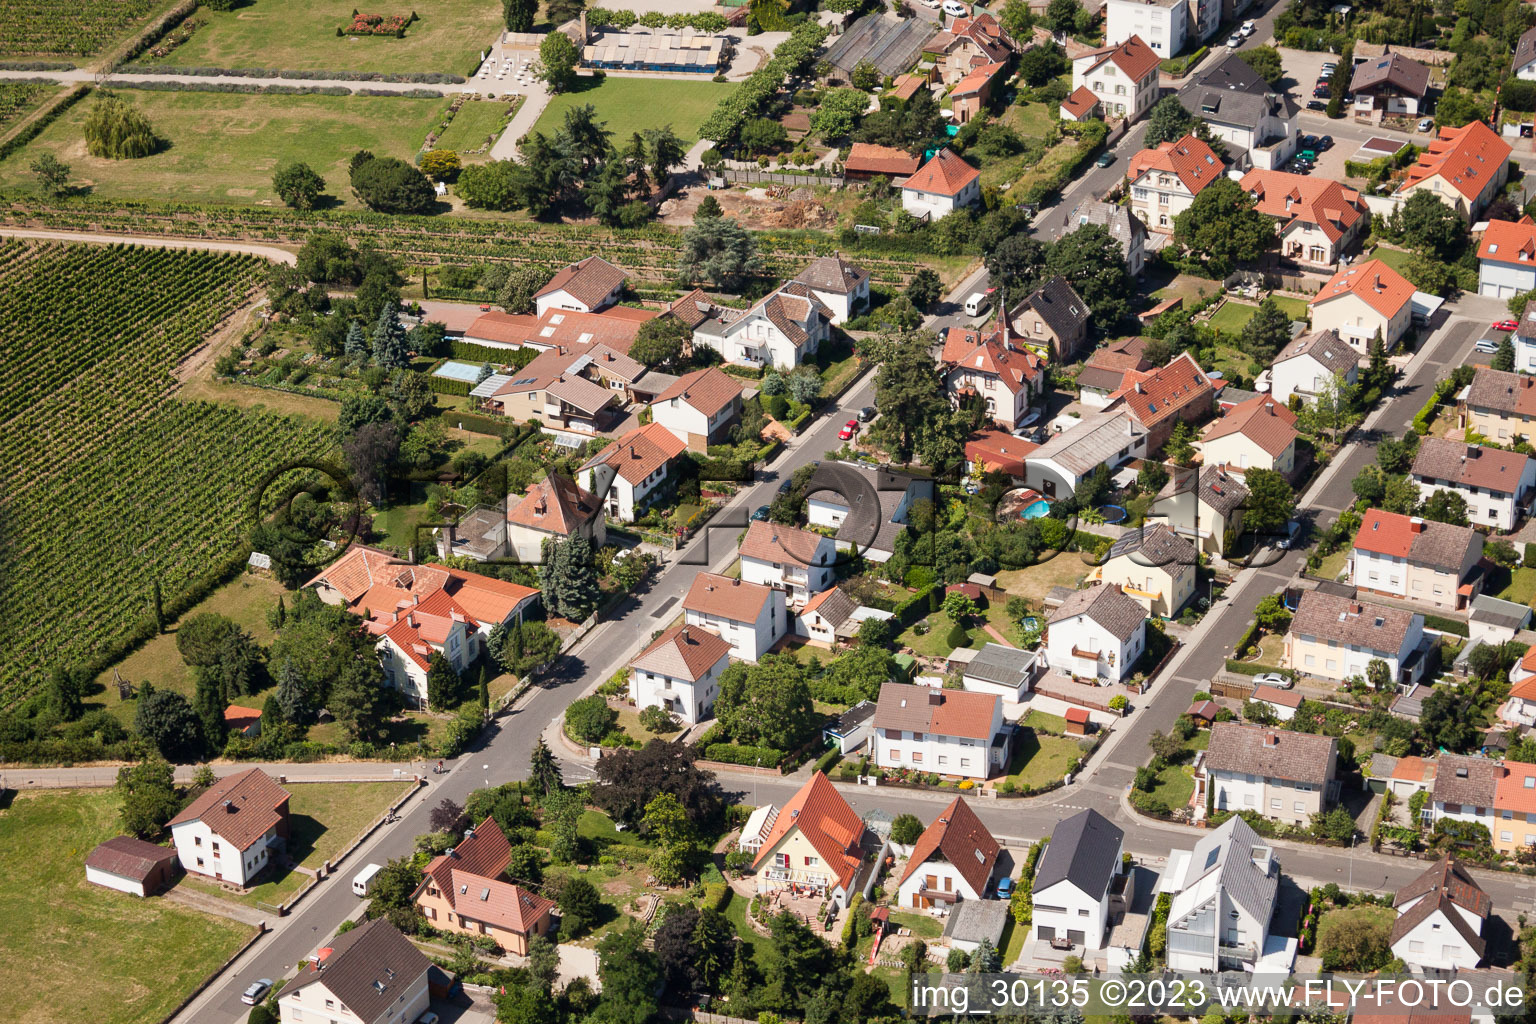 Vue oblique de Wachenheim an der Weinstraße dans le département Rhénanie-Palatinat, Allemagne